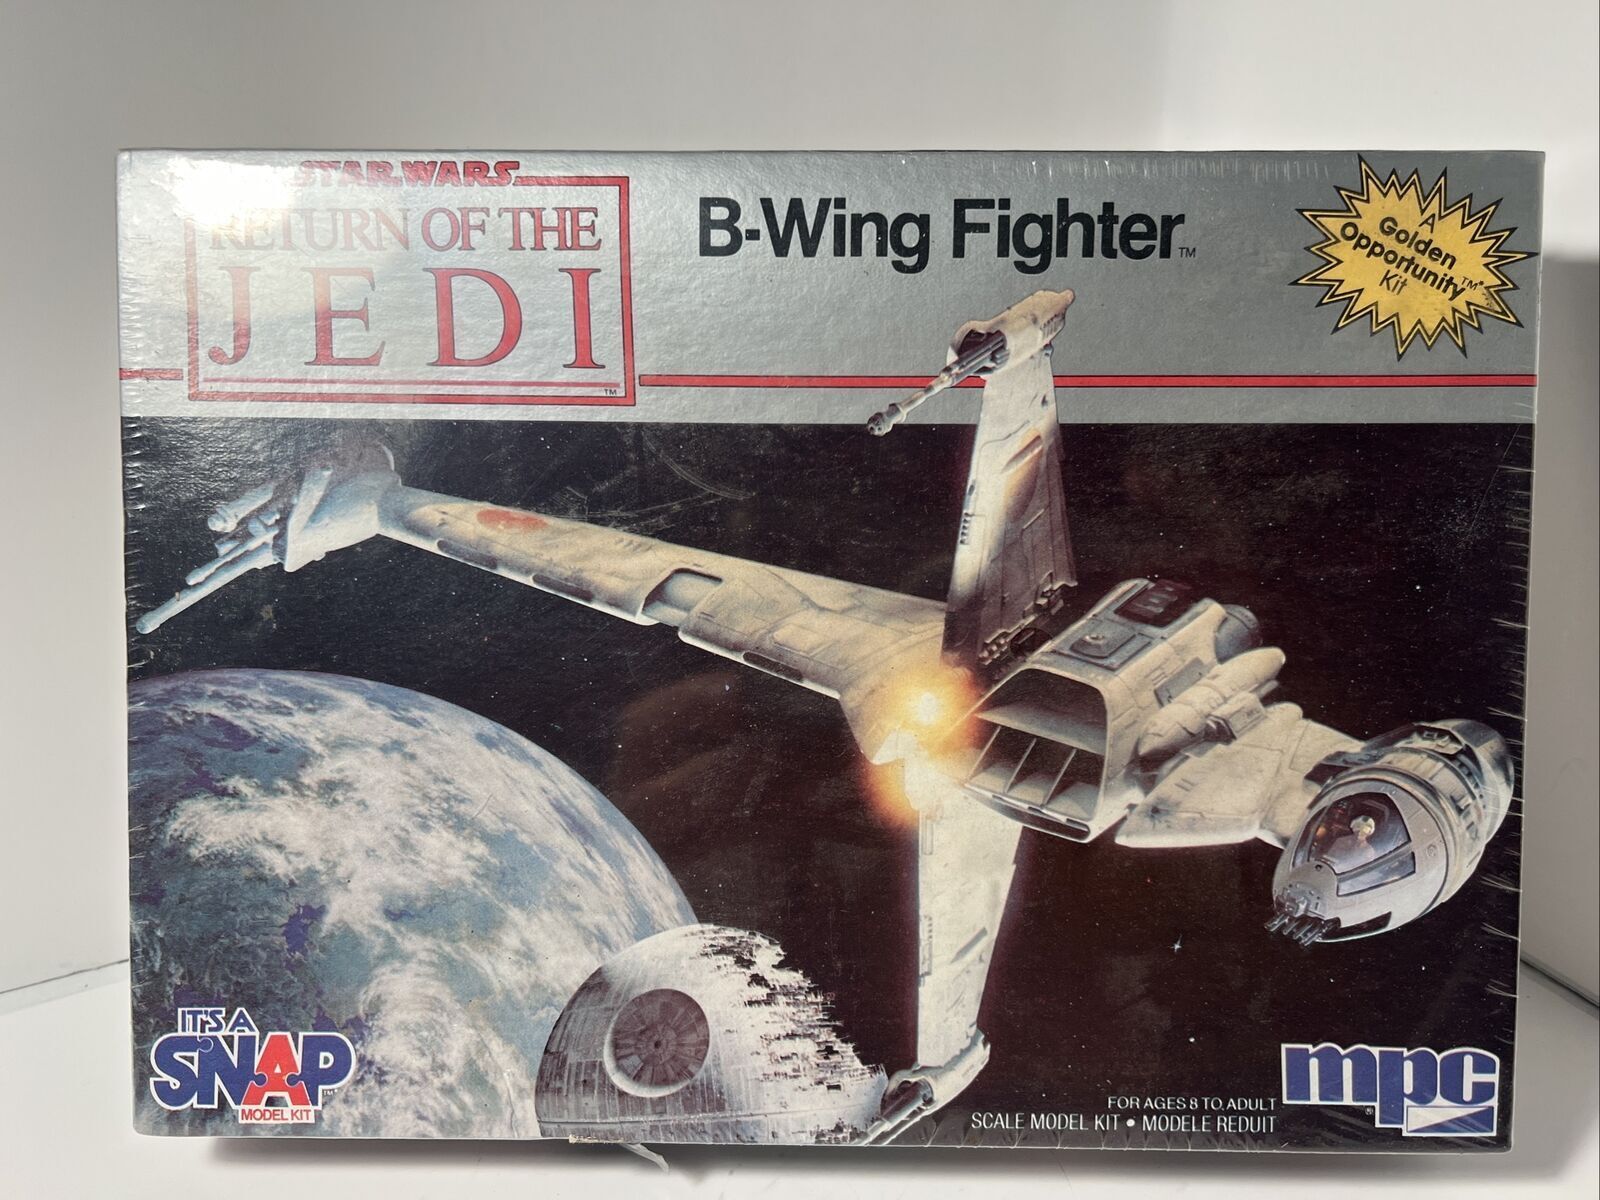 MPC STAR WARS RETURN OF THE JEDI B-WING FIGHTER Kit MODEL 1-1974 NEW SEALED